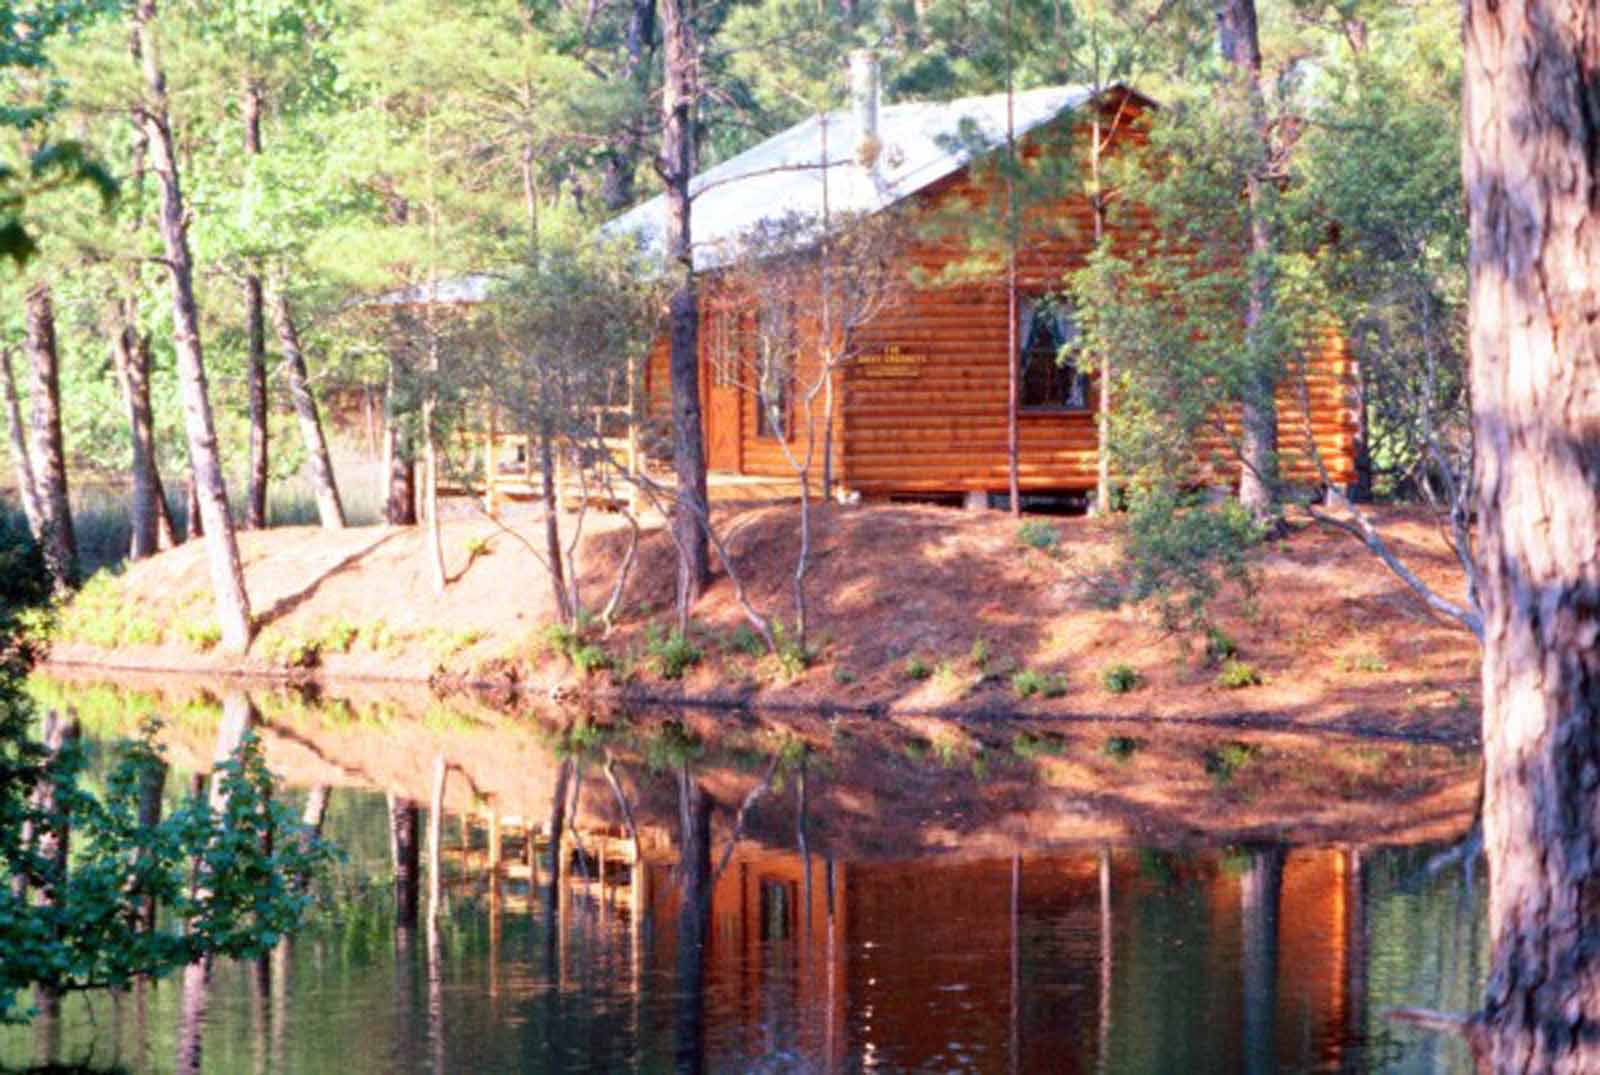 Davy Crockett - One Bedroom with Loft Log Cabin